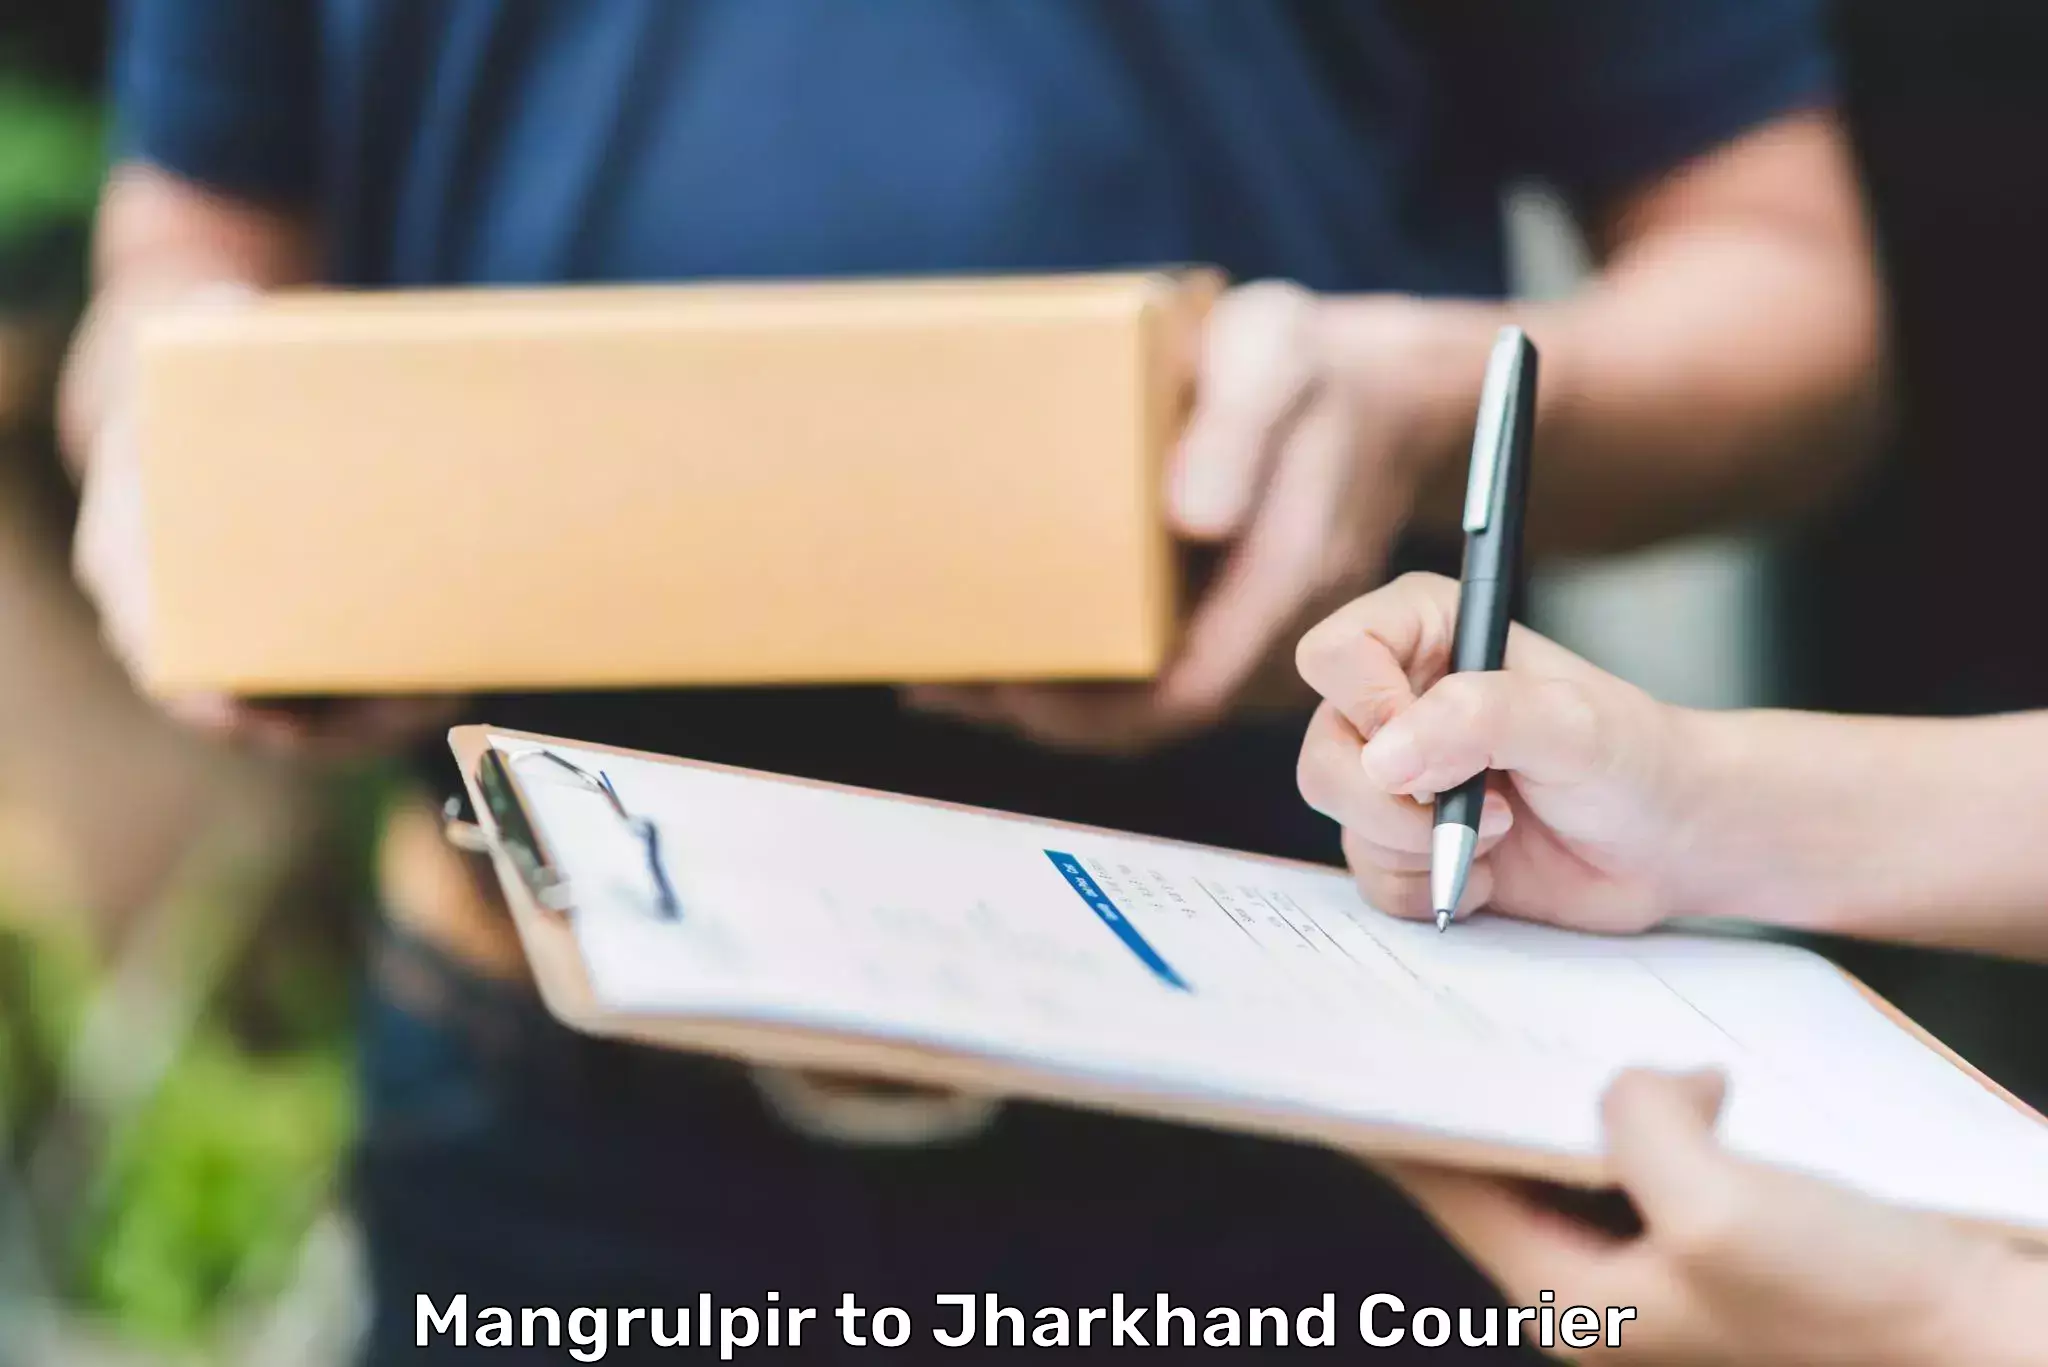 Shipping and handling Mangrulpir to IIIT Ranchi